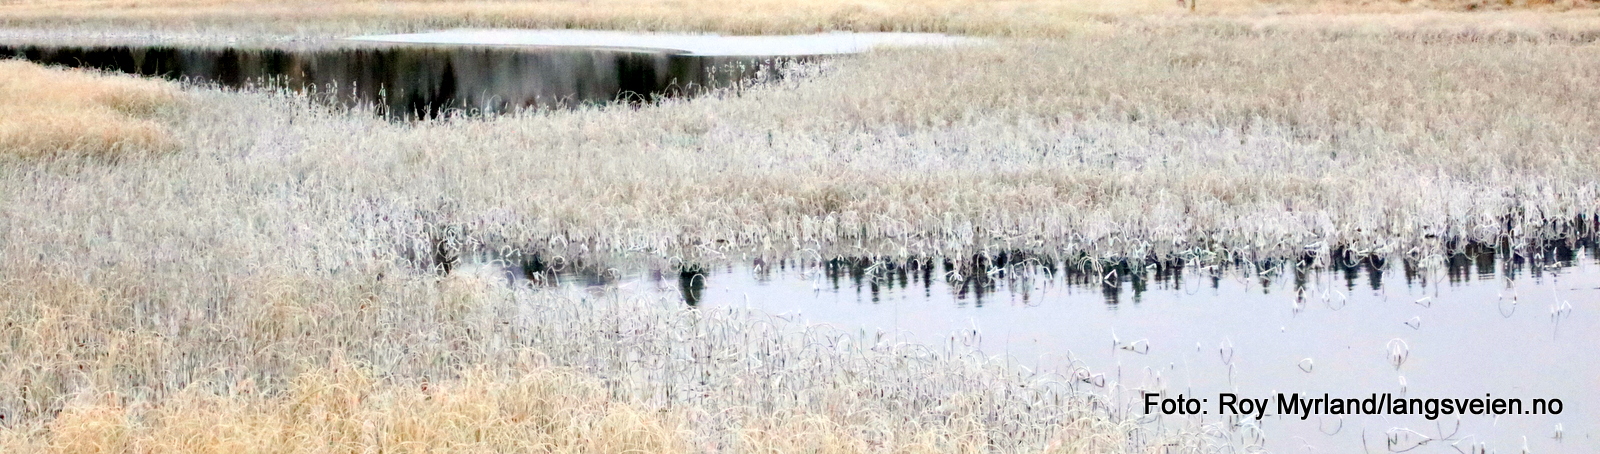 Fjellvann rim hhøst foto roy myrland